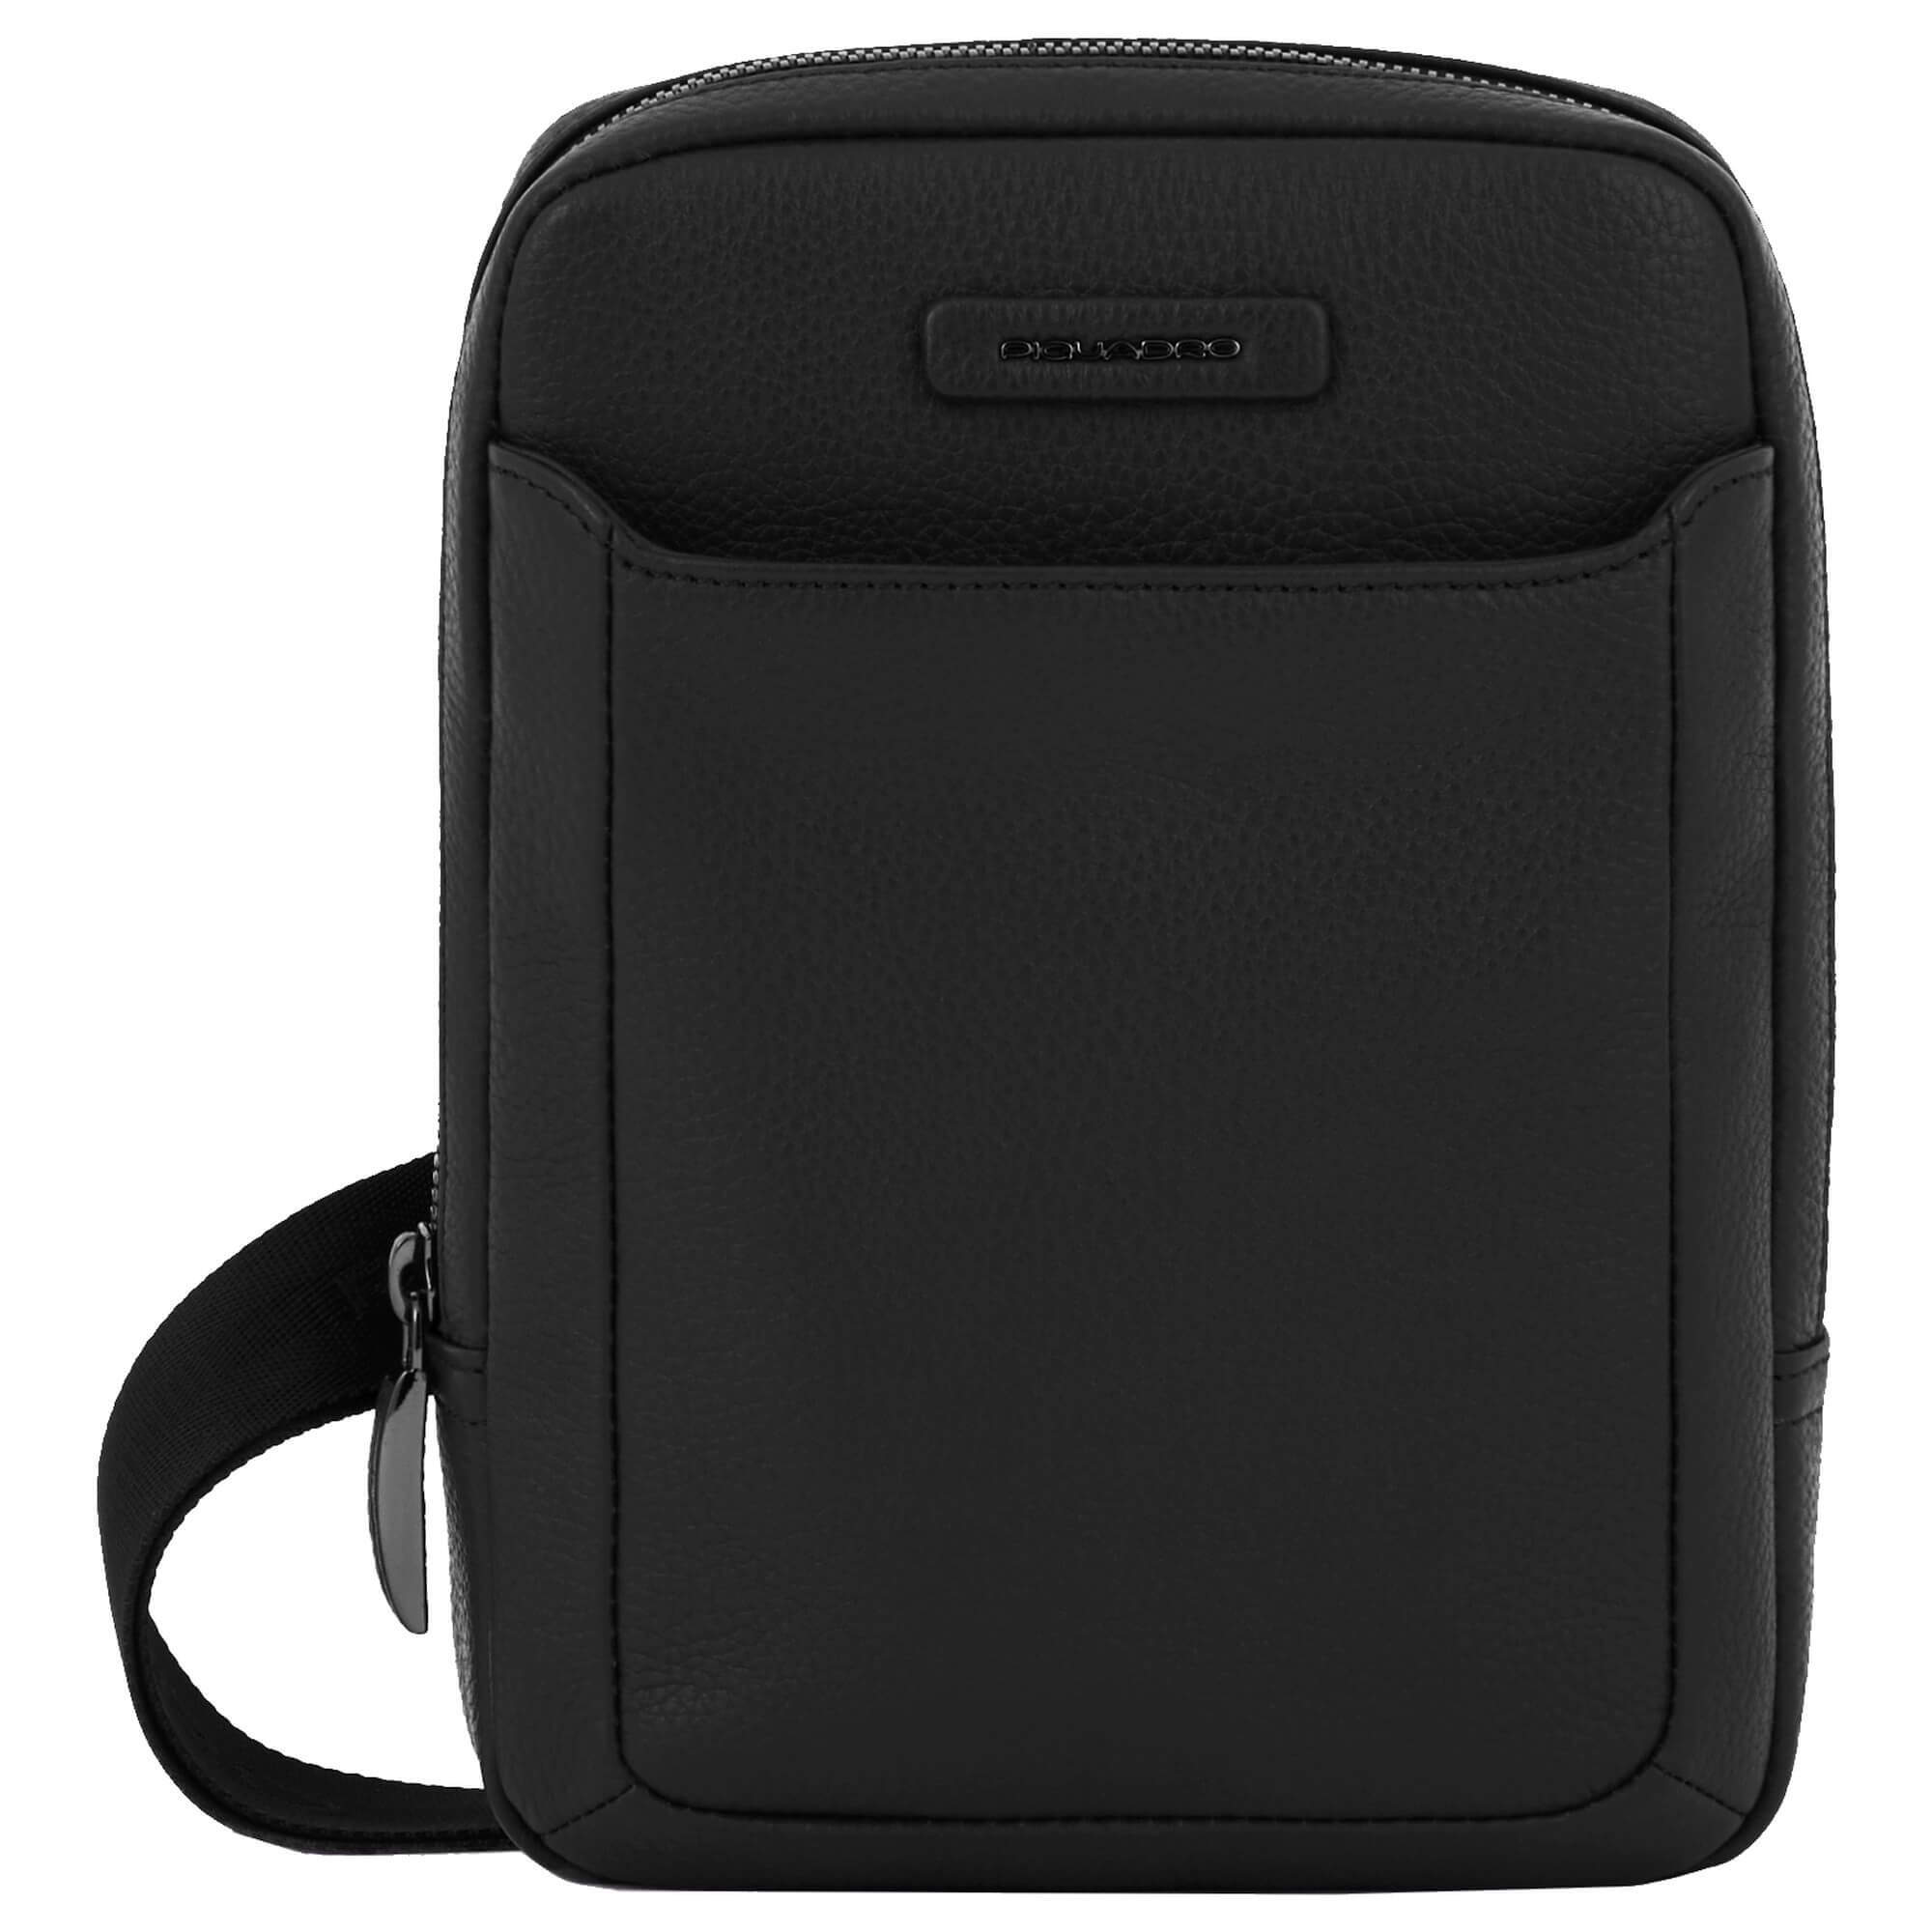 Сумка через плечо Piquadro Modus 2 - 22 см, черный сумка piquadro modus special ca3084mos n